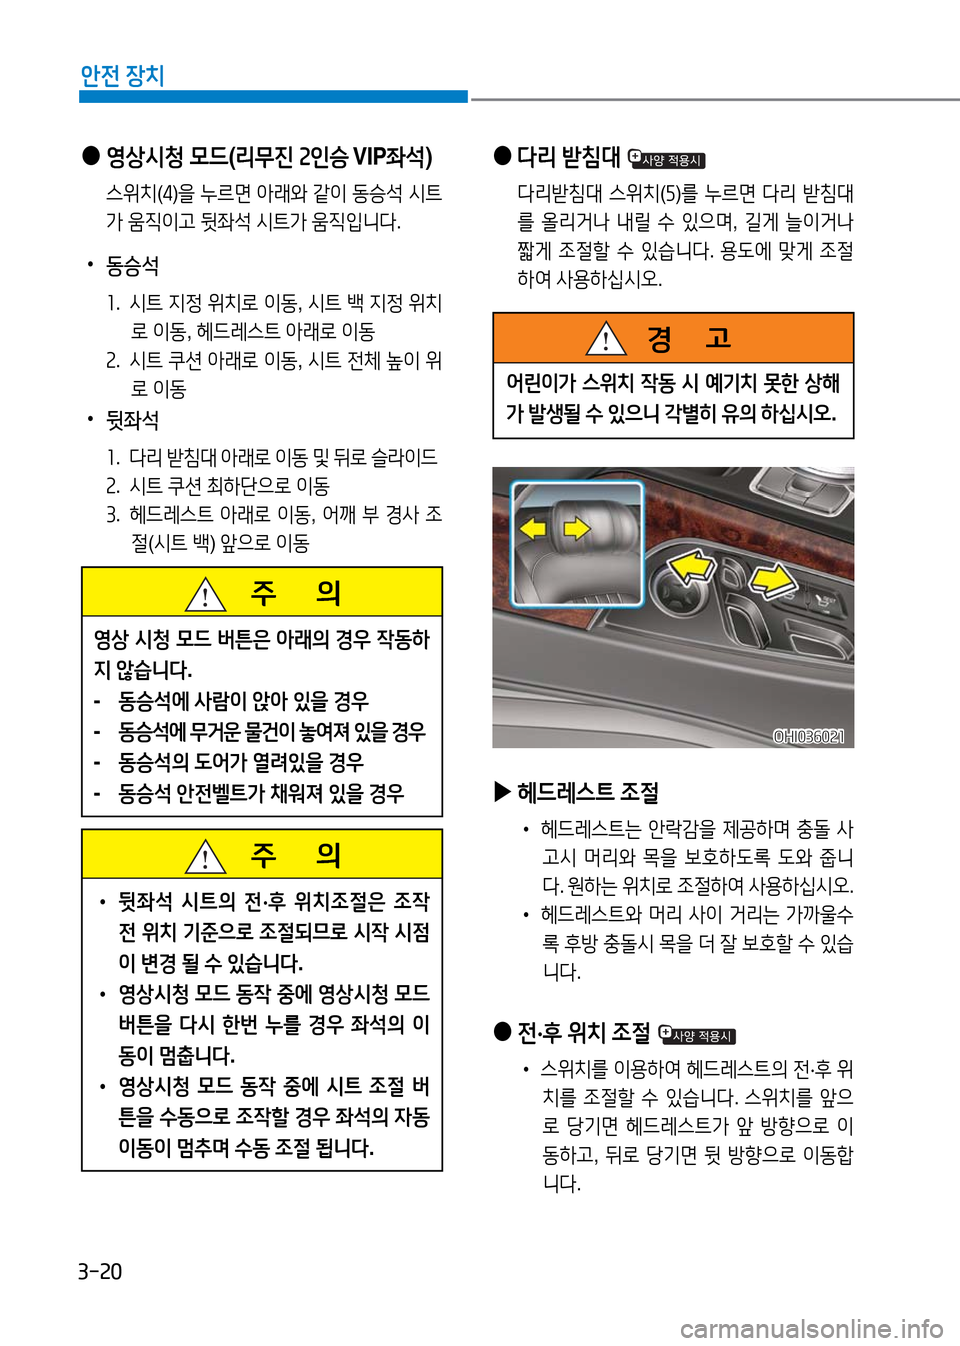 Hyundai Genesis 2016  EQ900 HI - 사용 설명서 (in Korean) 3-20
안전 장치
 ●다리 받침대 
 다리받침대 스위치(5)를 누르면 다리 받침대
를 올리거나 내릴 수 있으며, 길게 늘이거나 
짧게 조절할 수 있습니다. 용�